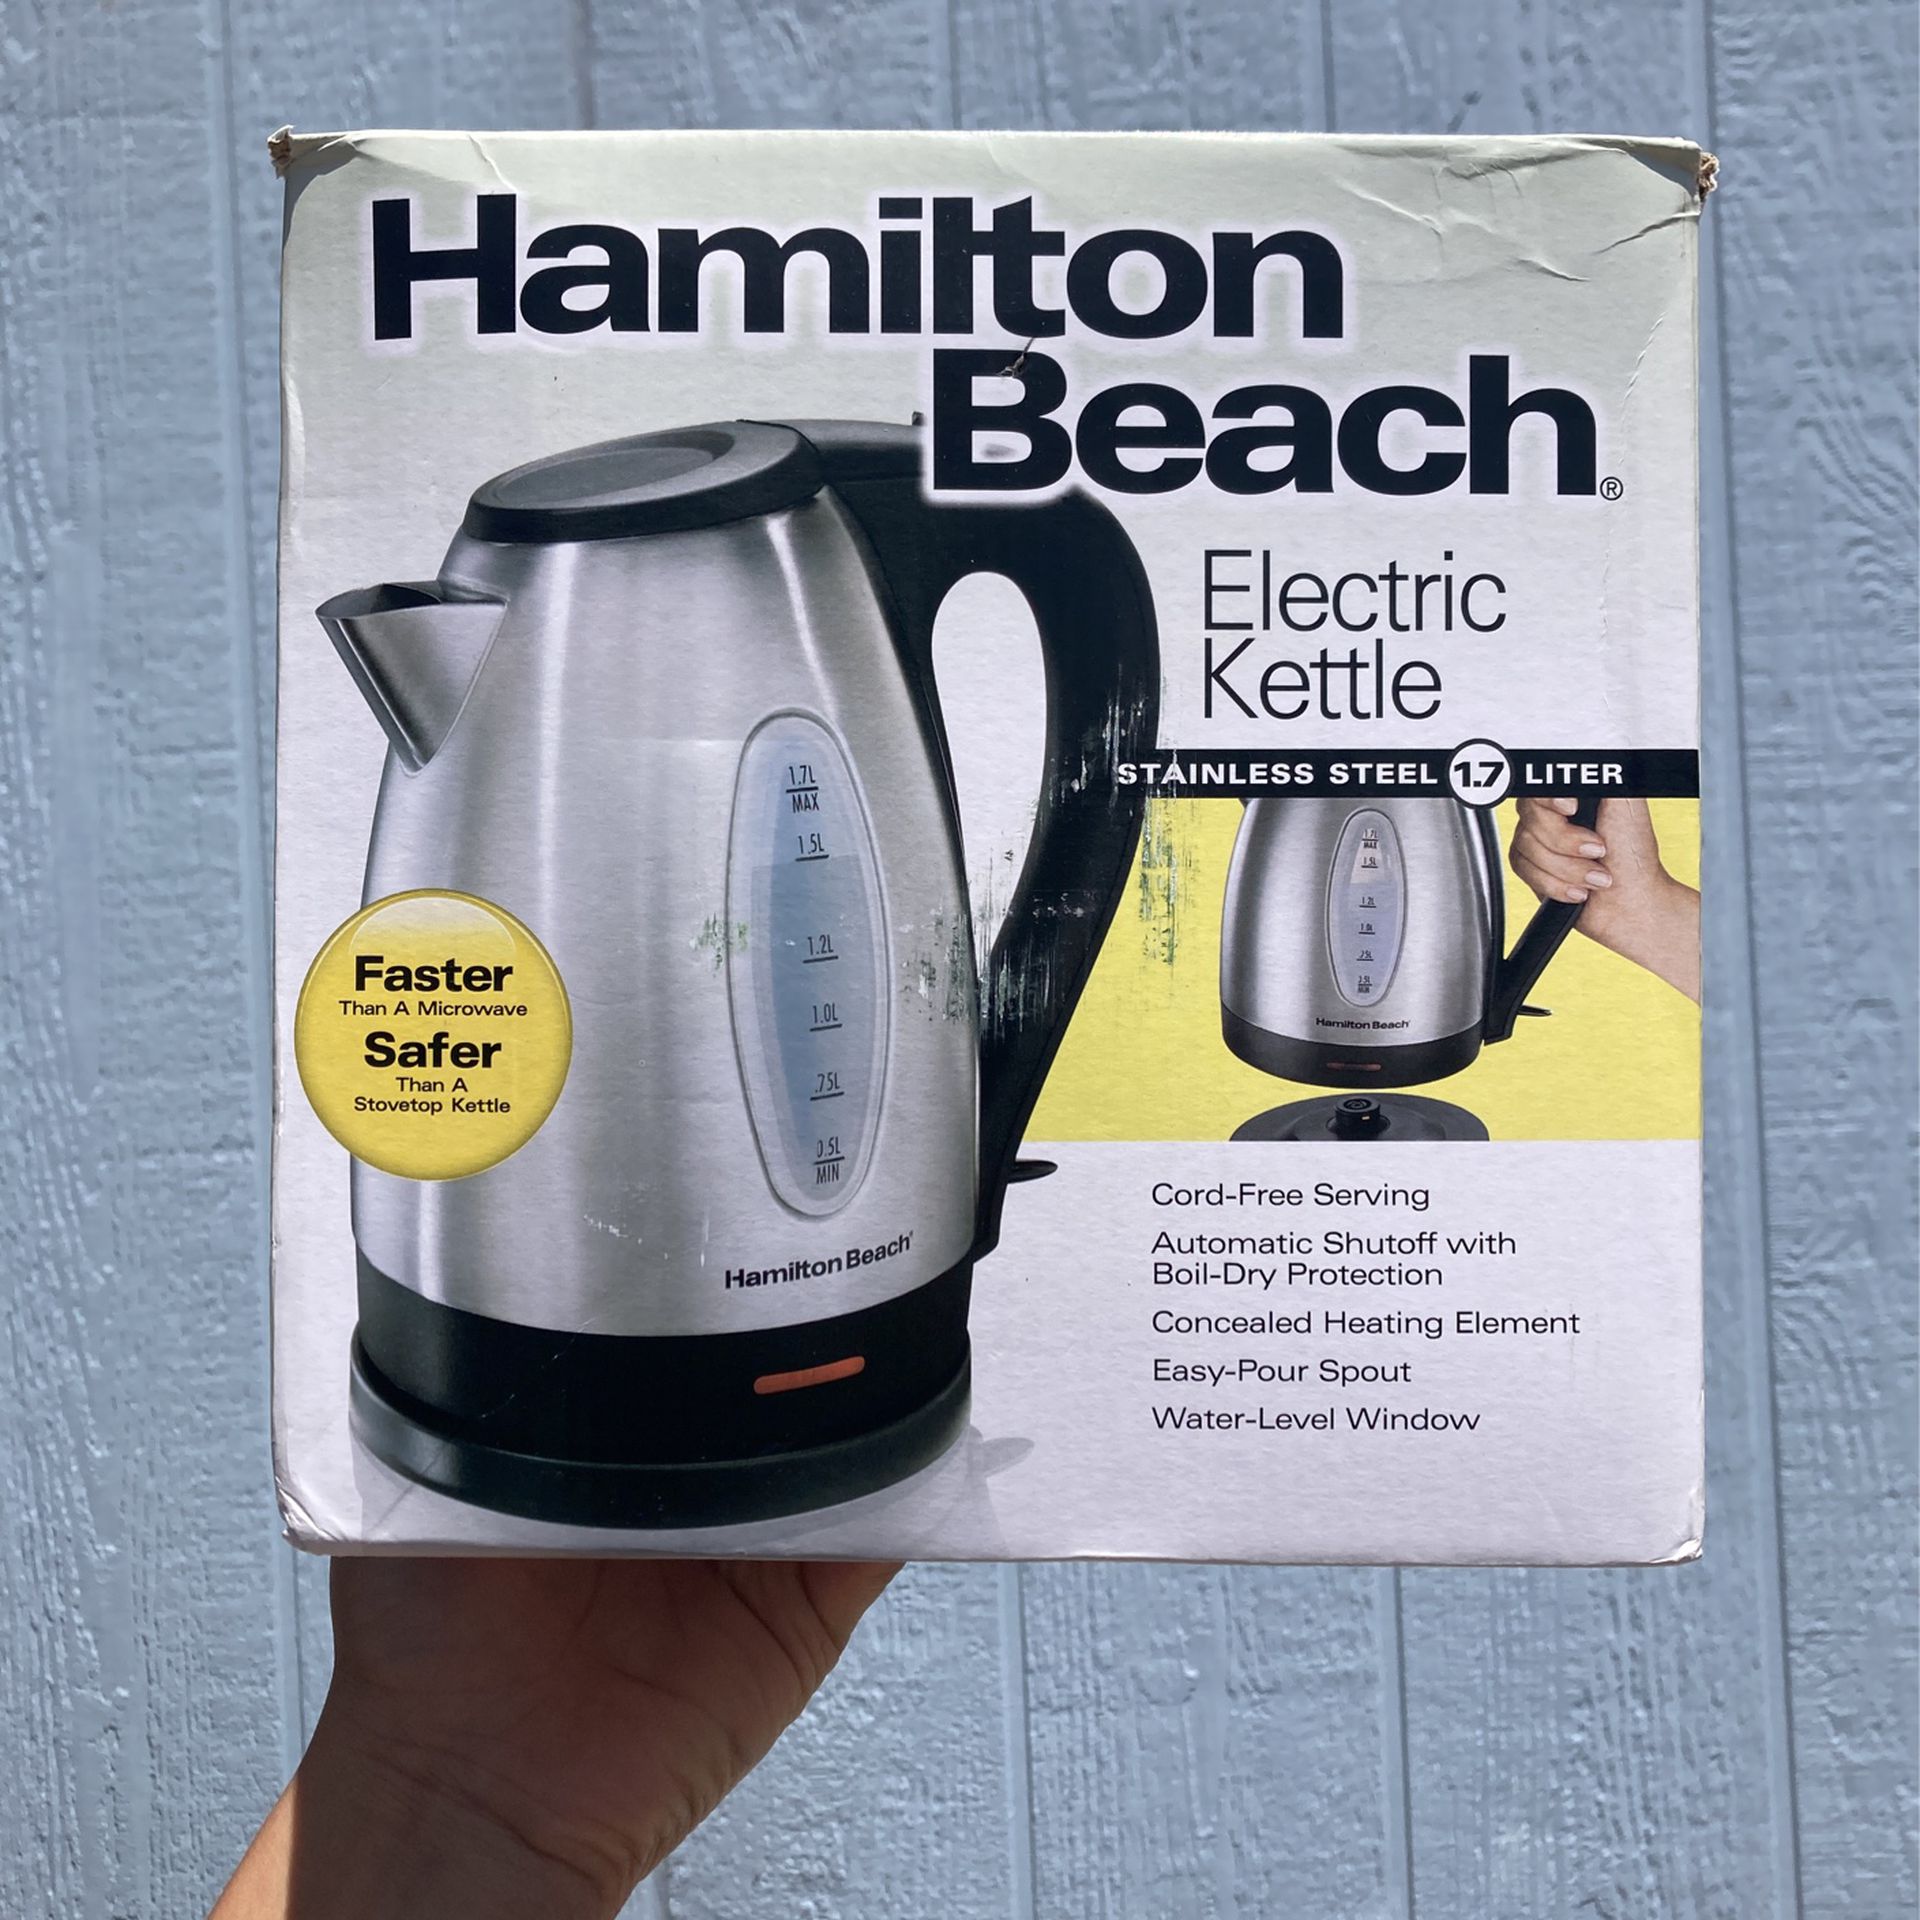 Hamilton Beach 40880 Stainless Steel Electric Kettle, 1.7-Liter